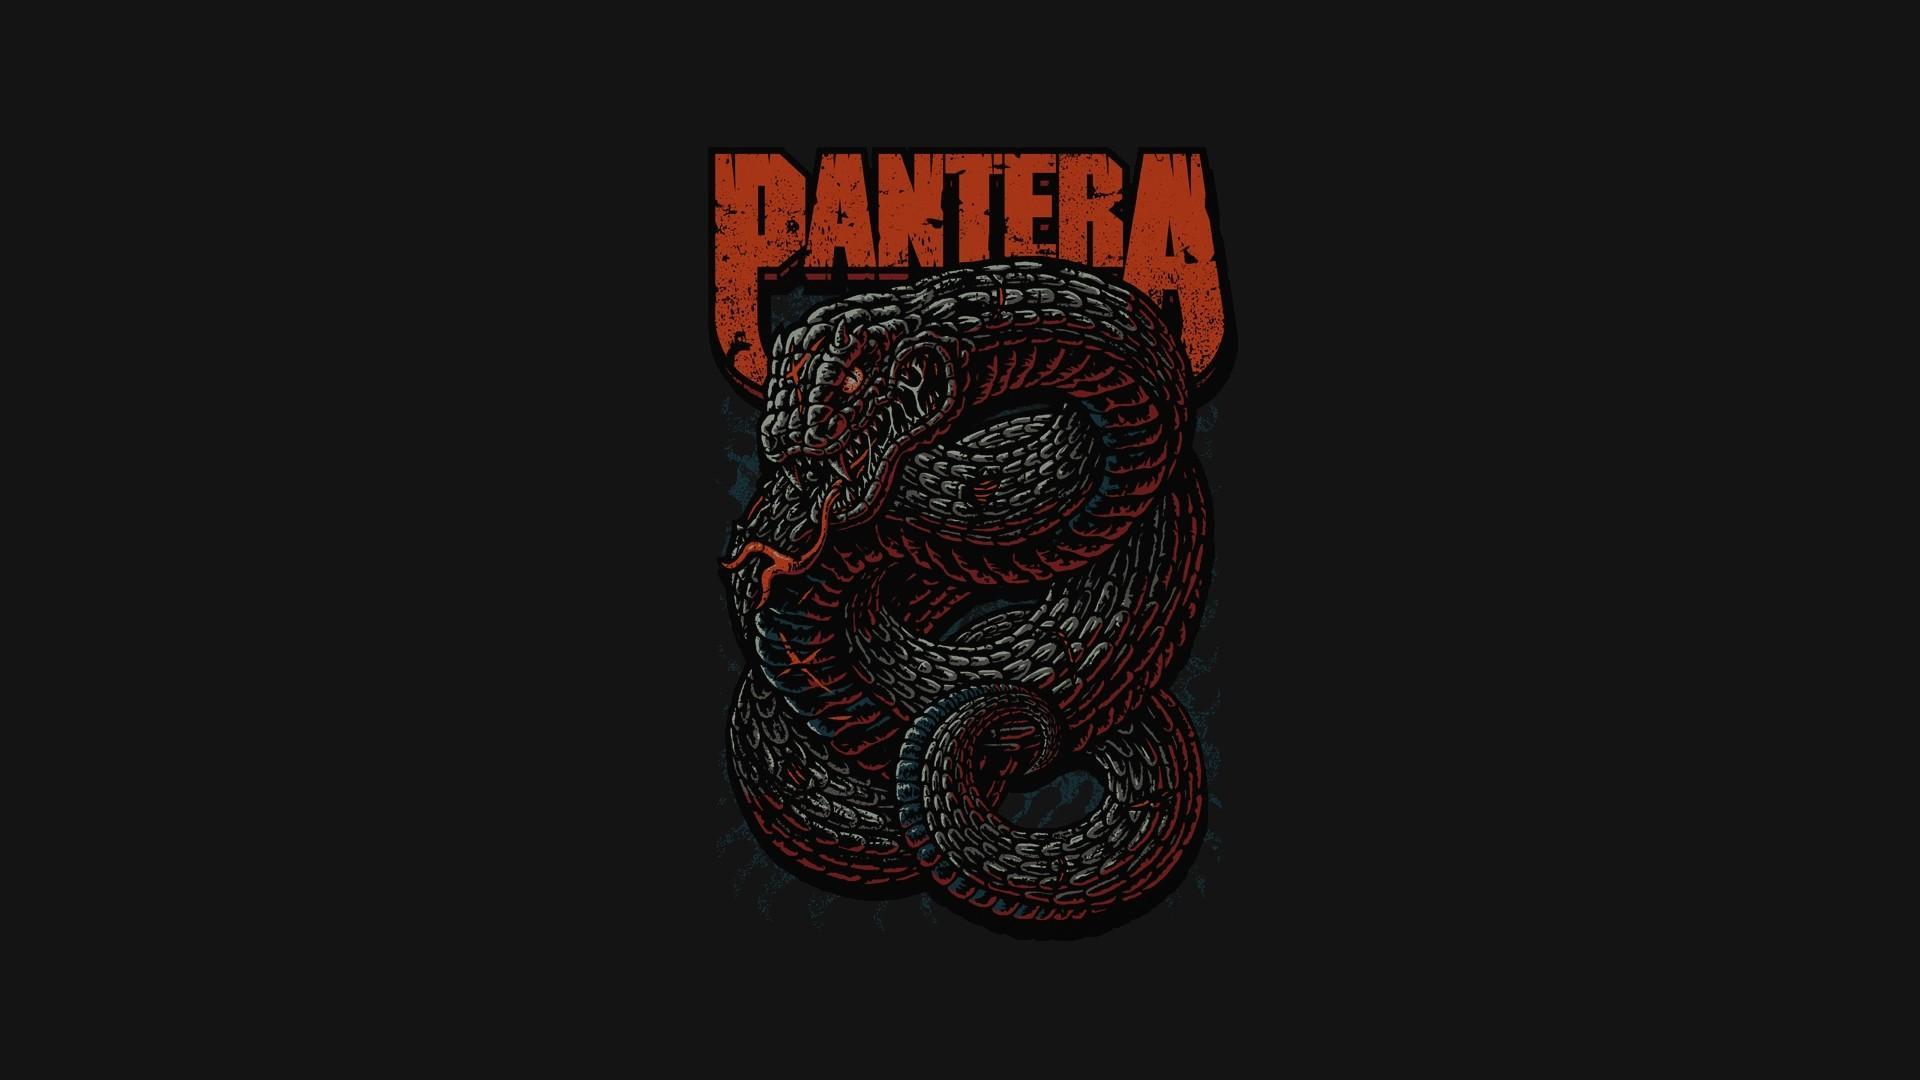 HD wallpaper, 1920X1080 Pantera Music Heavy Metal Thrash Metal Snake Wallpaper Jpg 171 Kb